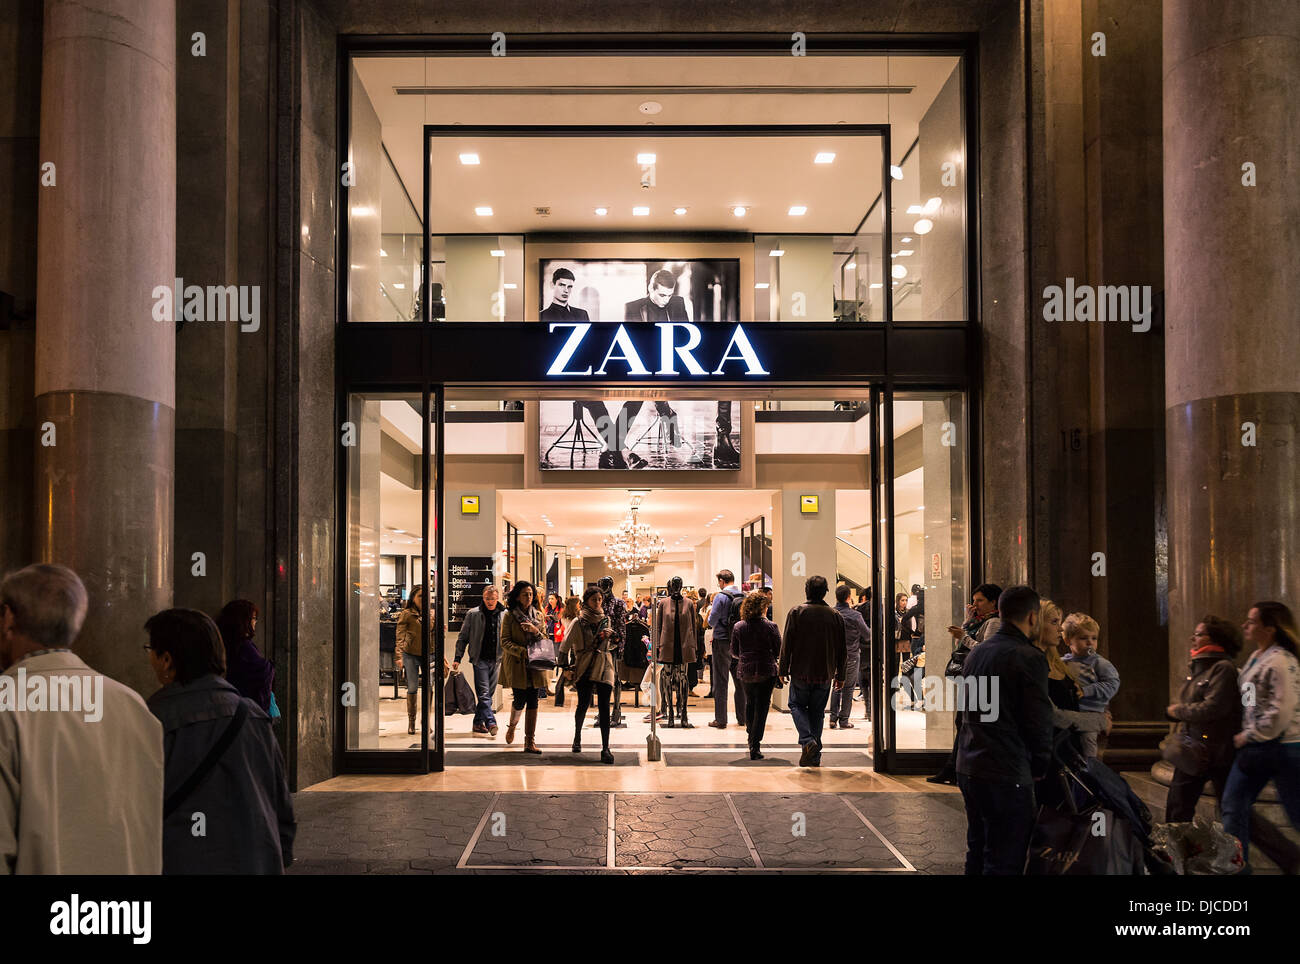 Zara Espagne Hotsell, 60% OFF | www.ingeniovirtual.com